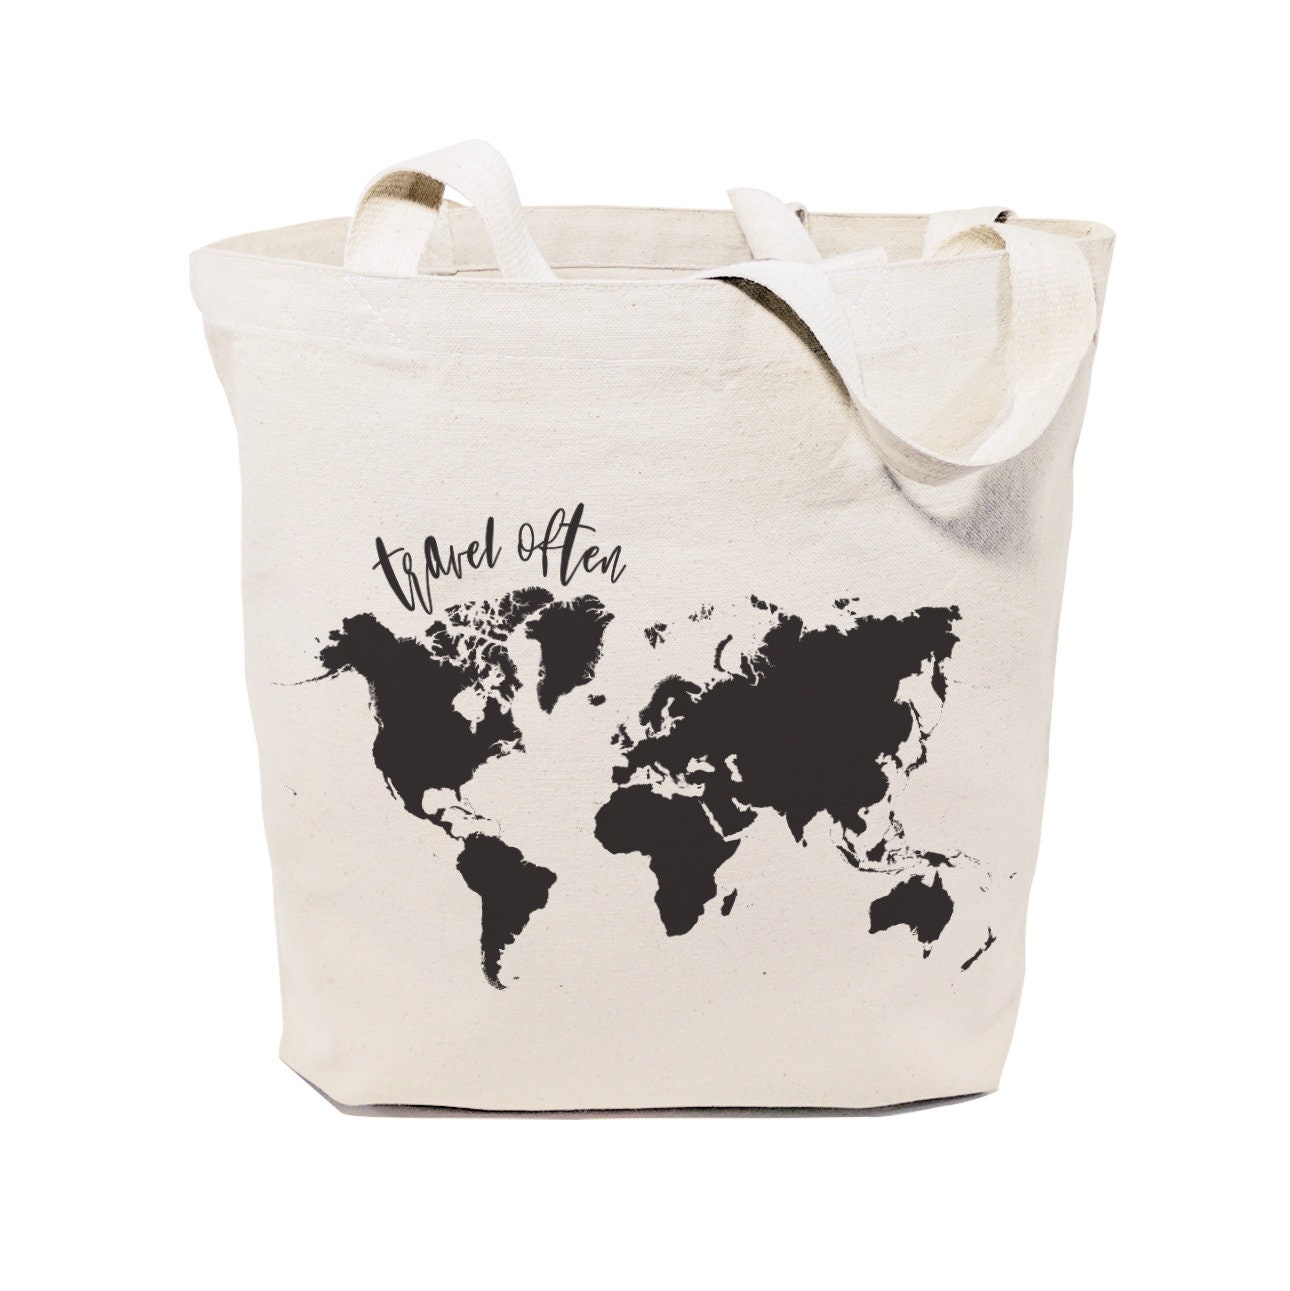 Reusable and Folda'ble Fabric Tote Bags for Travel, Gym, Yoga